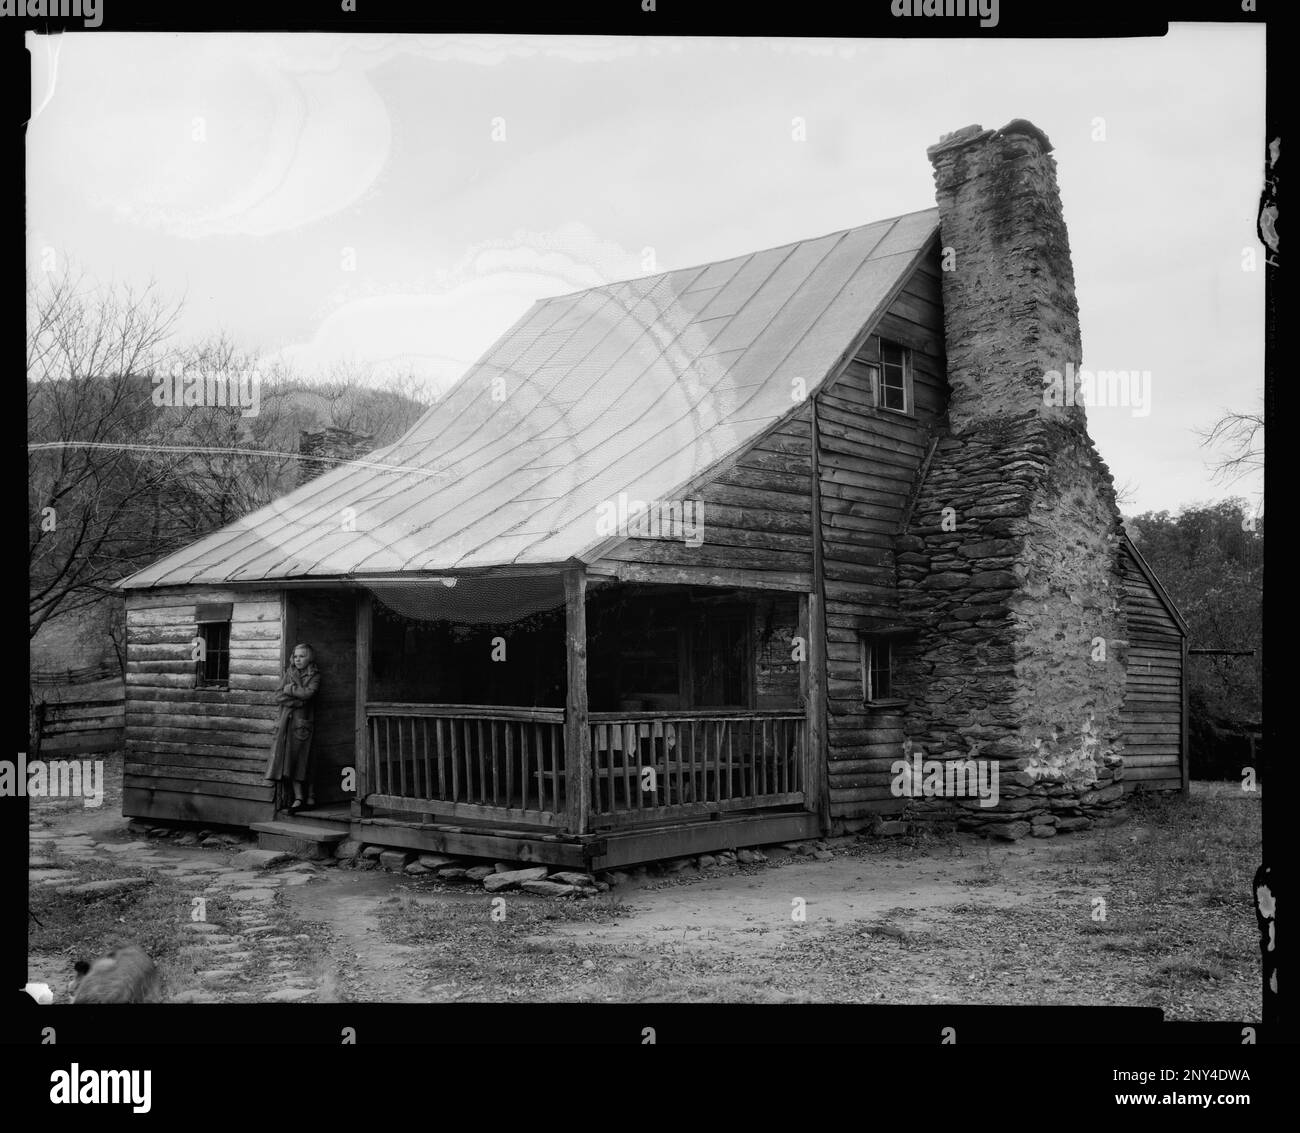 McClintock's Cabin, Albemarle County, Virginia. Carnegie Survey of the Architecture of the South. Stati Uniti Virginia Contea di Albemarle, Porches, Chimneys, Houses. Foto Stock